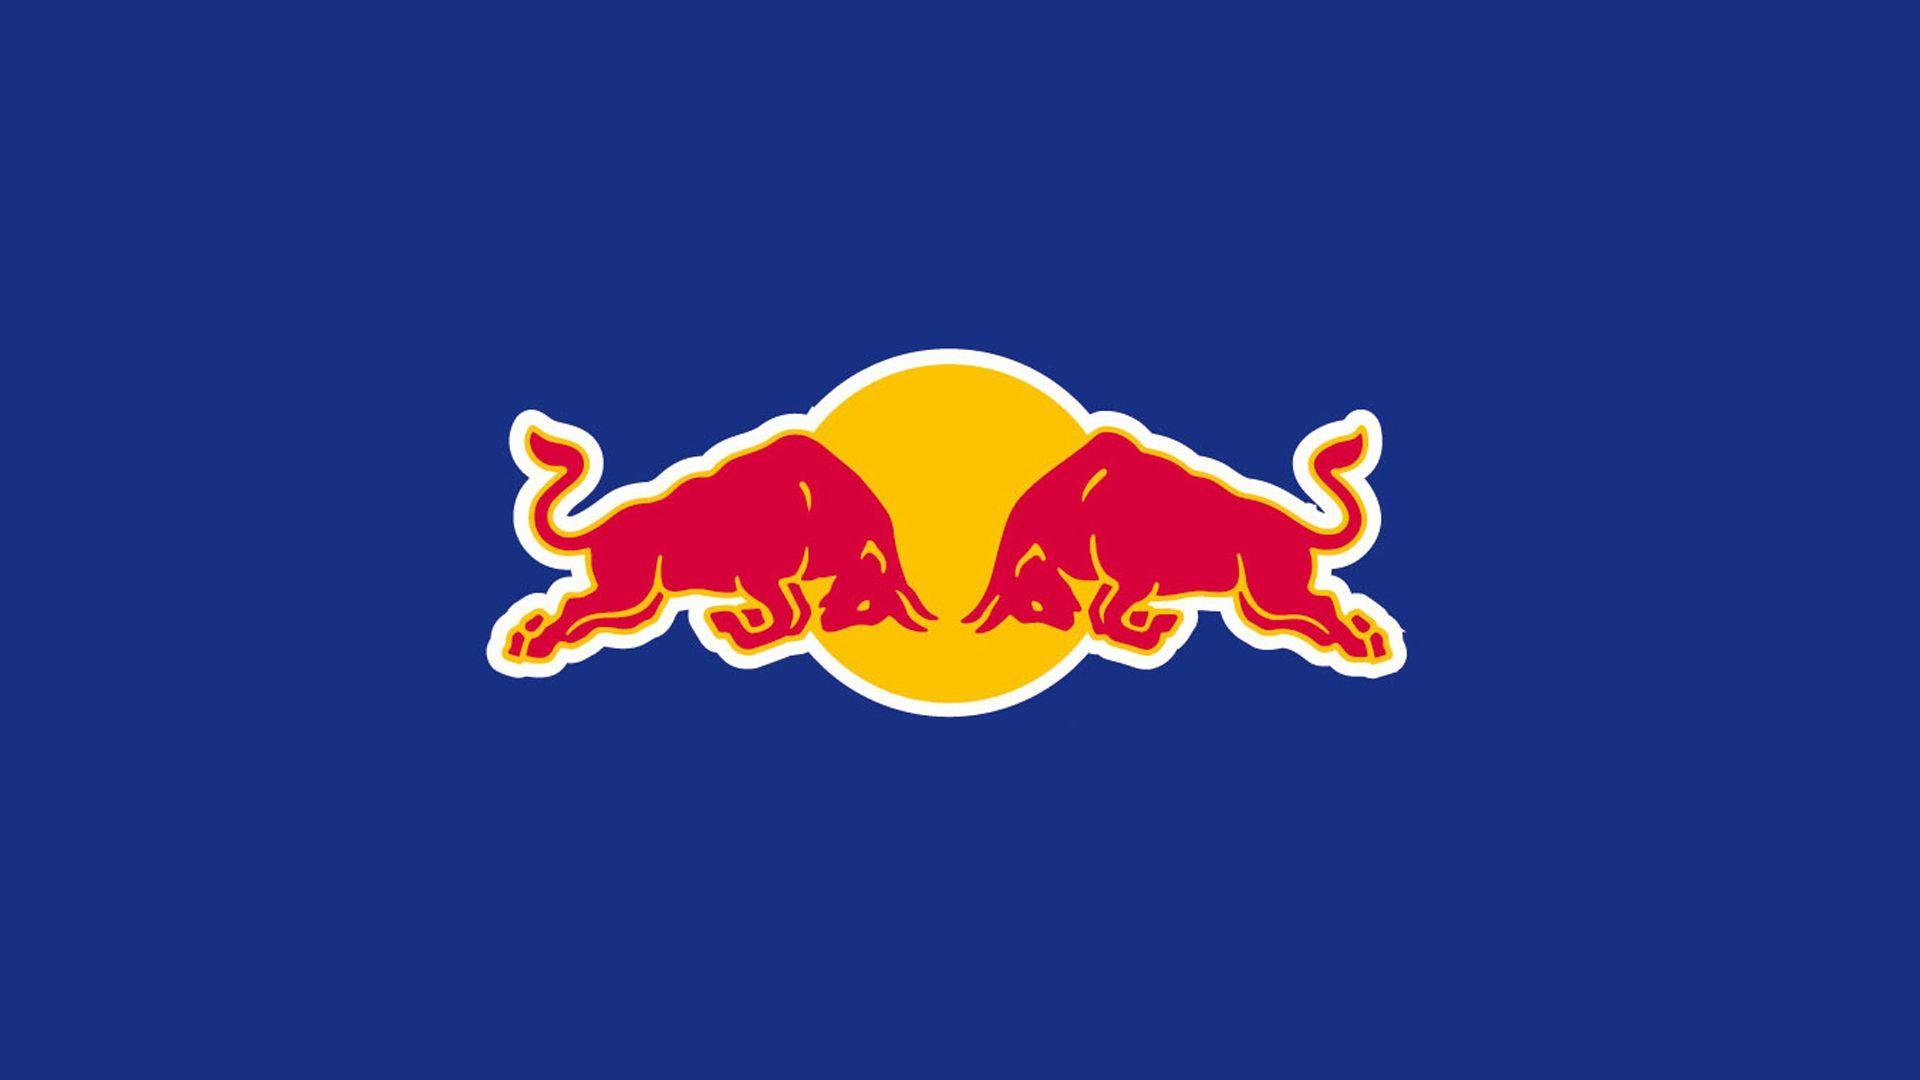 Red Bull Wallpapers HD - Wallpaper Cave